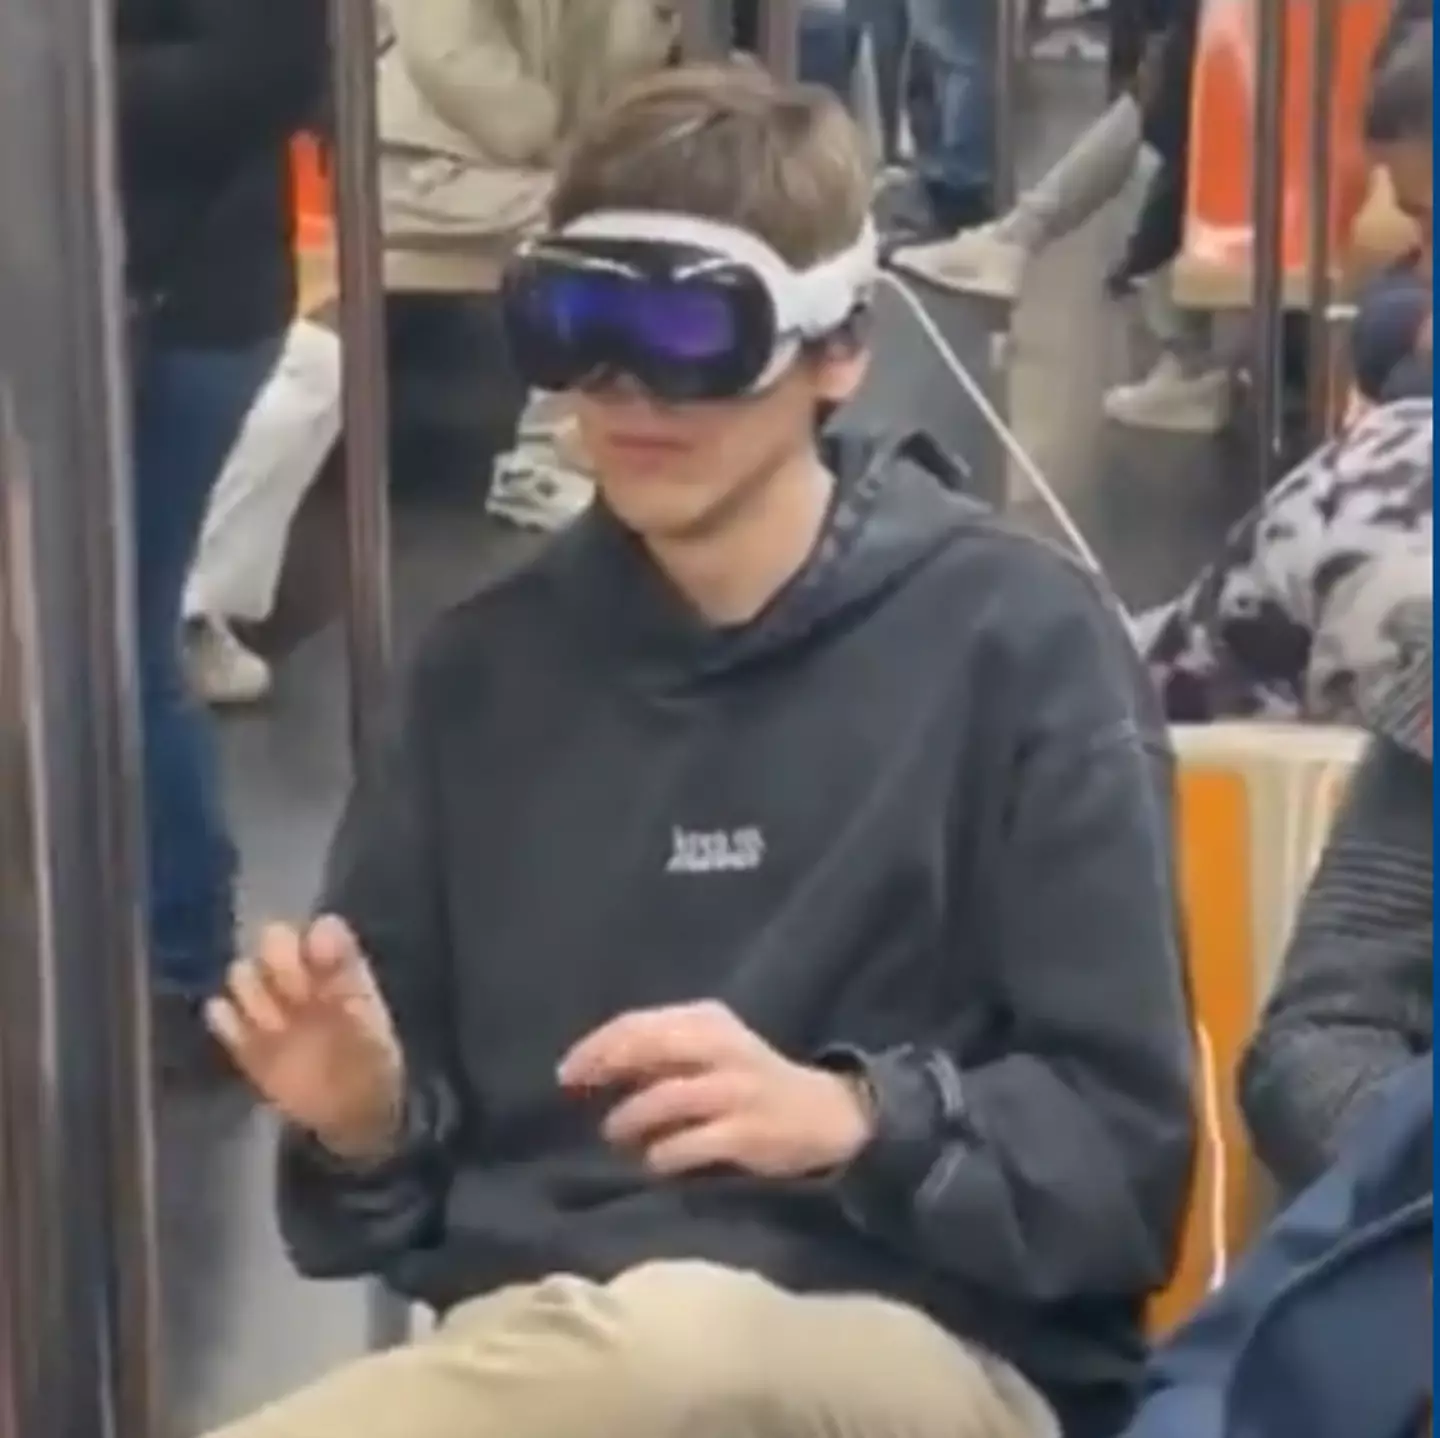 People have huge concerns after seeing man wearing Apple Vision Pro on subway